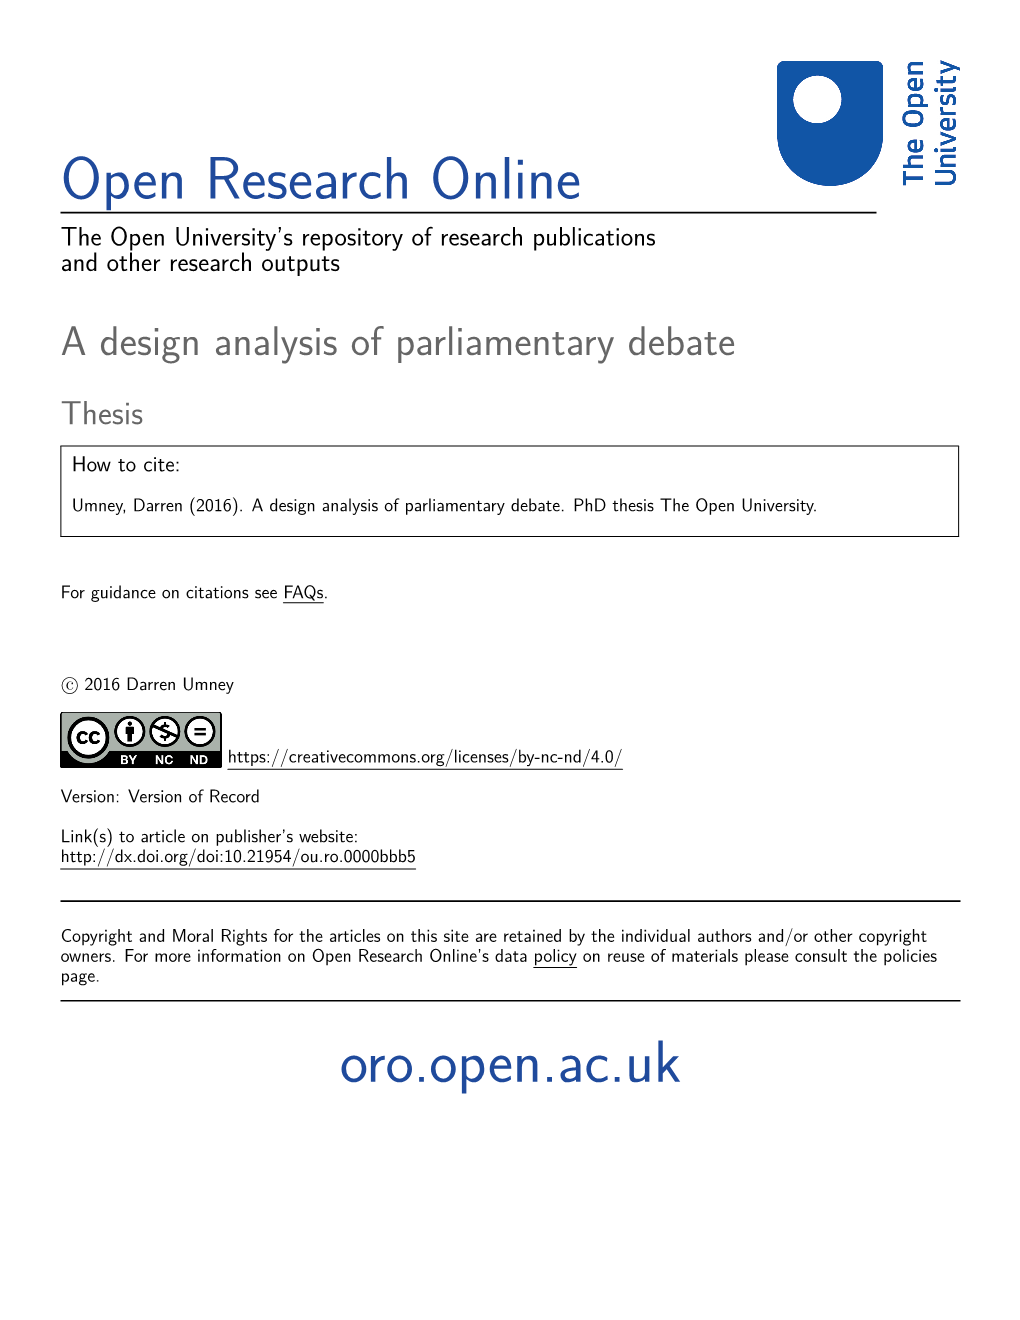 A Design Analysis of Parliamentary Debate